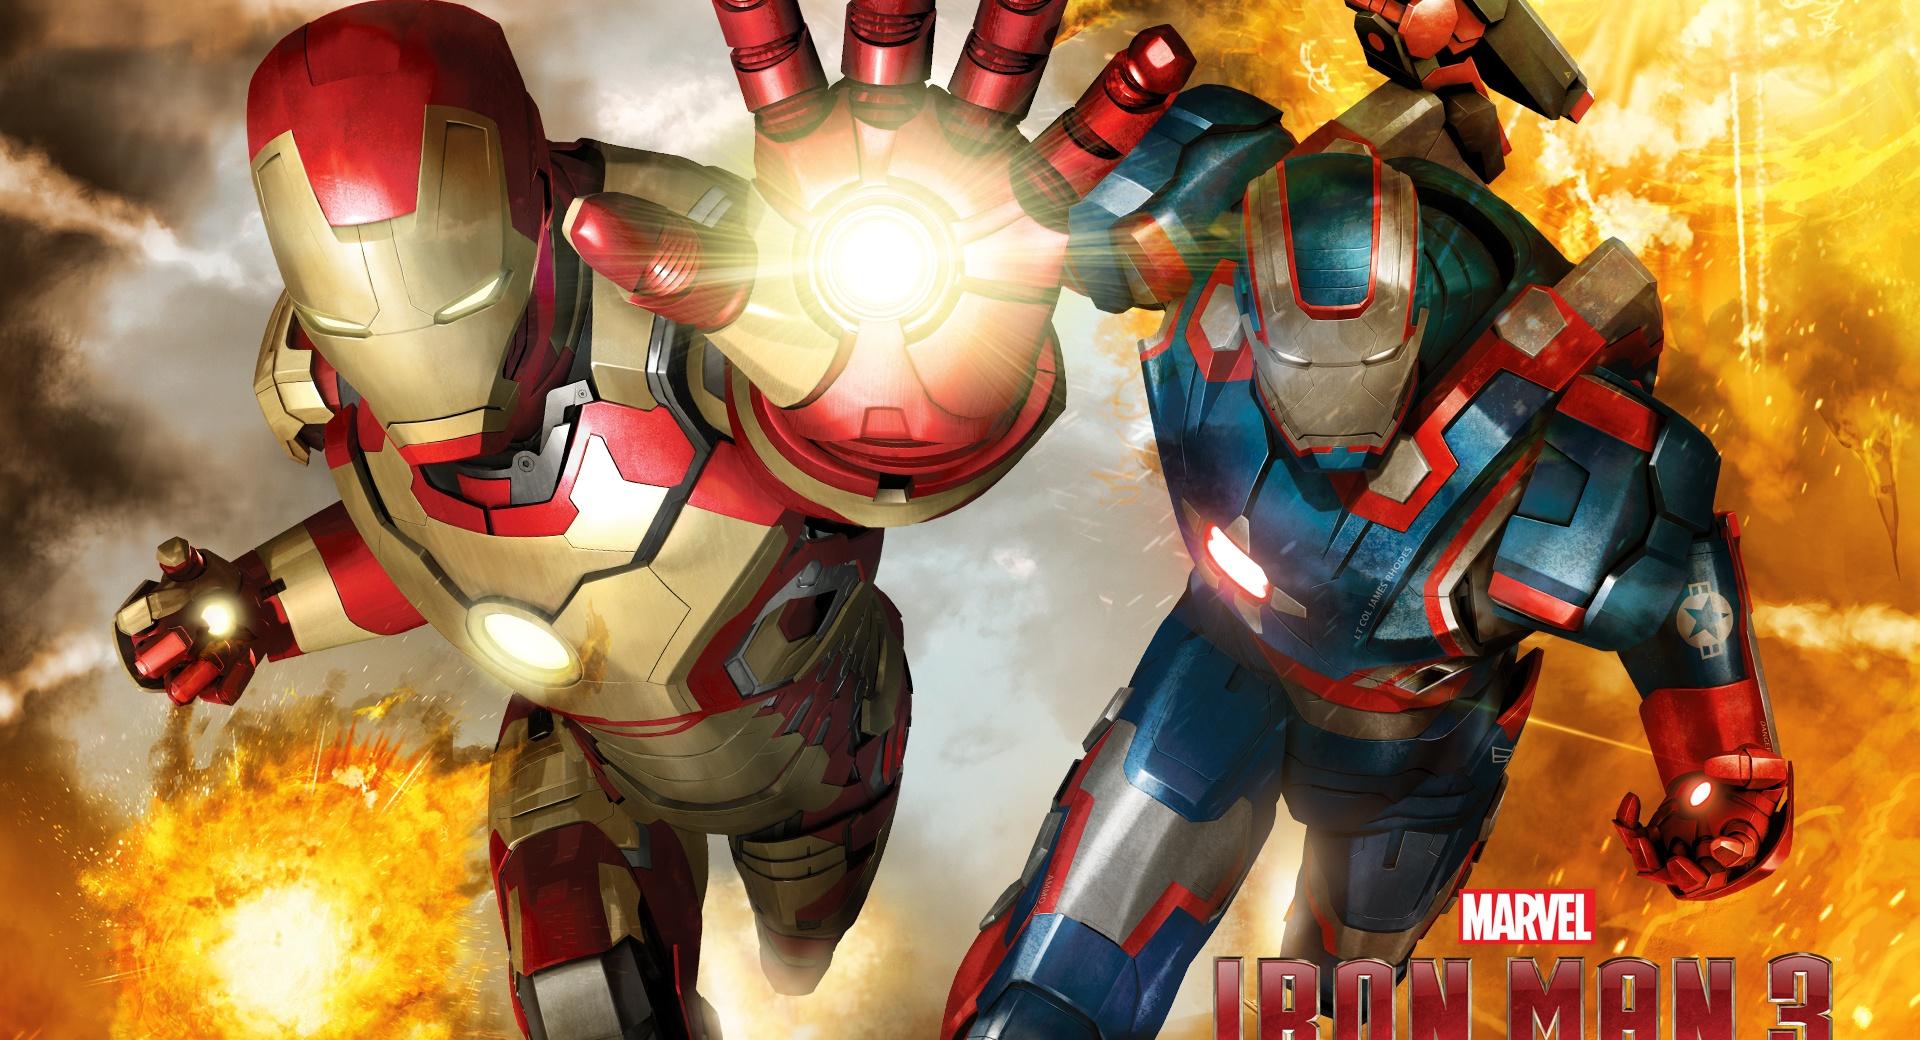 2013 Iron Man 3 Movie HD at 1024 x 1024 iPad size wallpapers HD quality